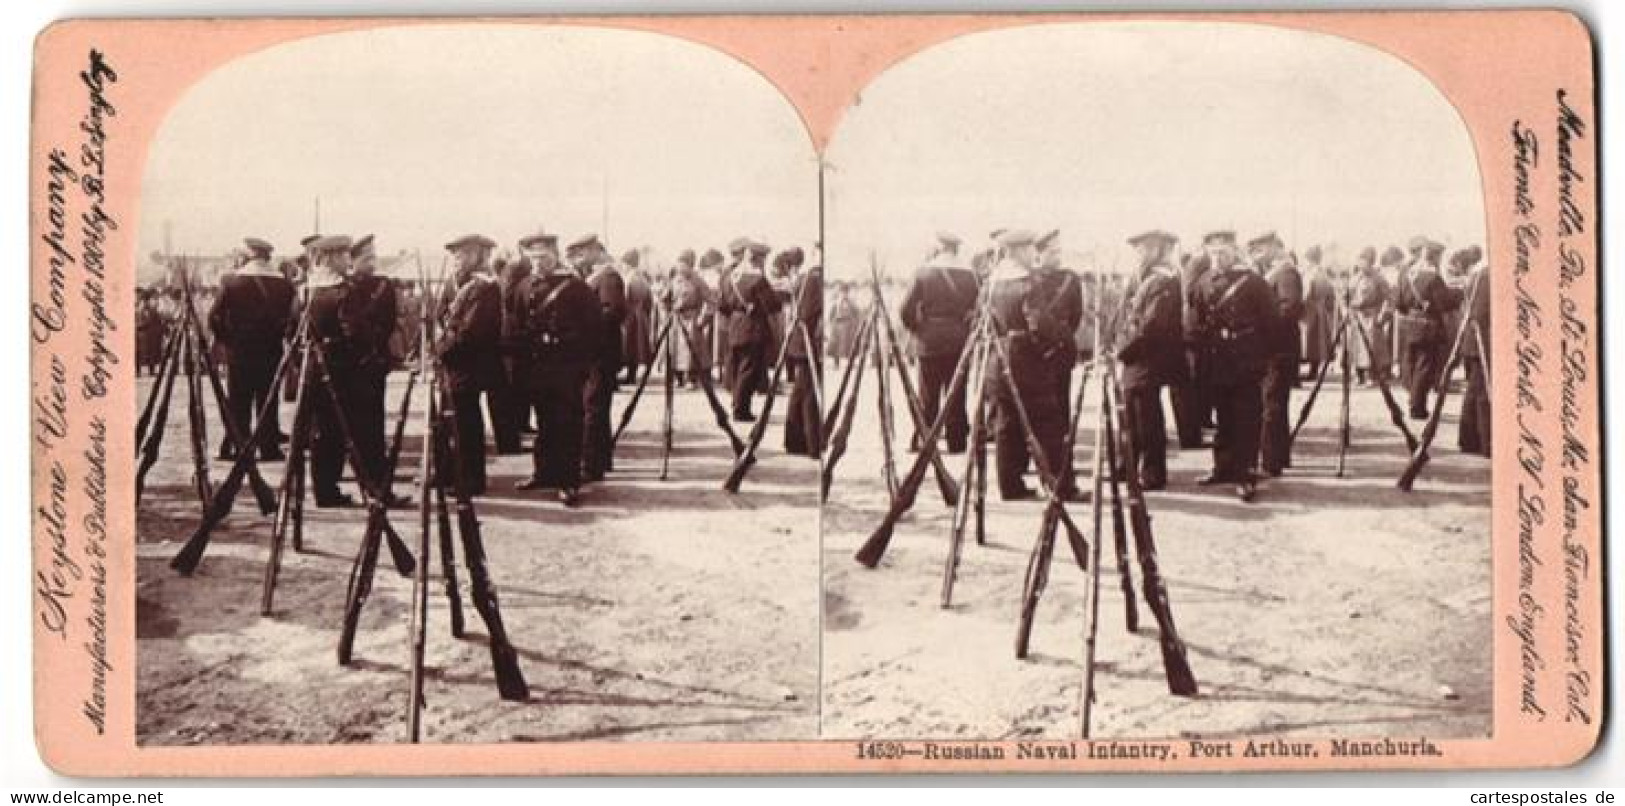 Stereo-Fotografie Keystone View Company, Meadville /Pa, Ansicht Port Arthur /Manchuria, Russian Naval Infantry  - Stereoscopic